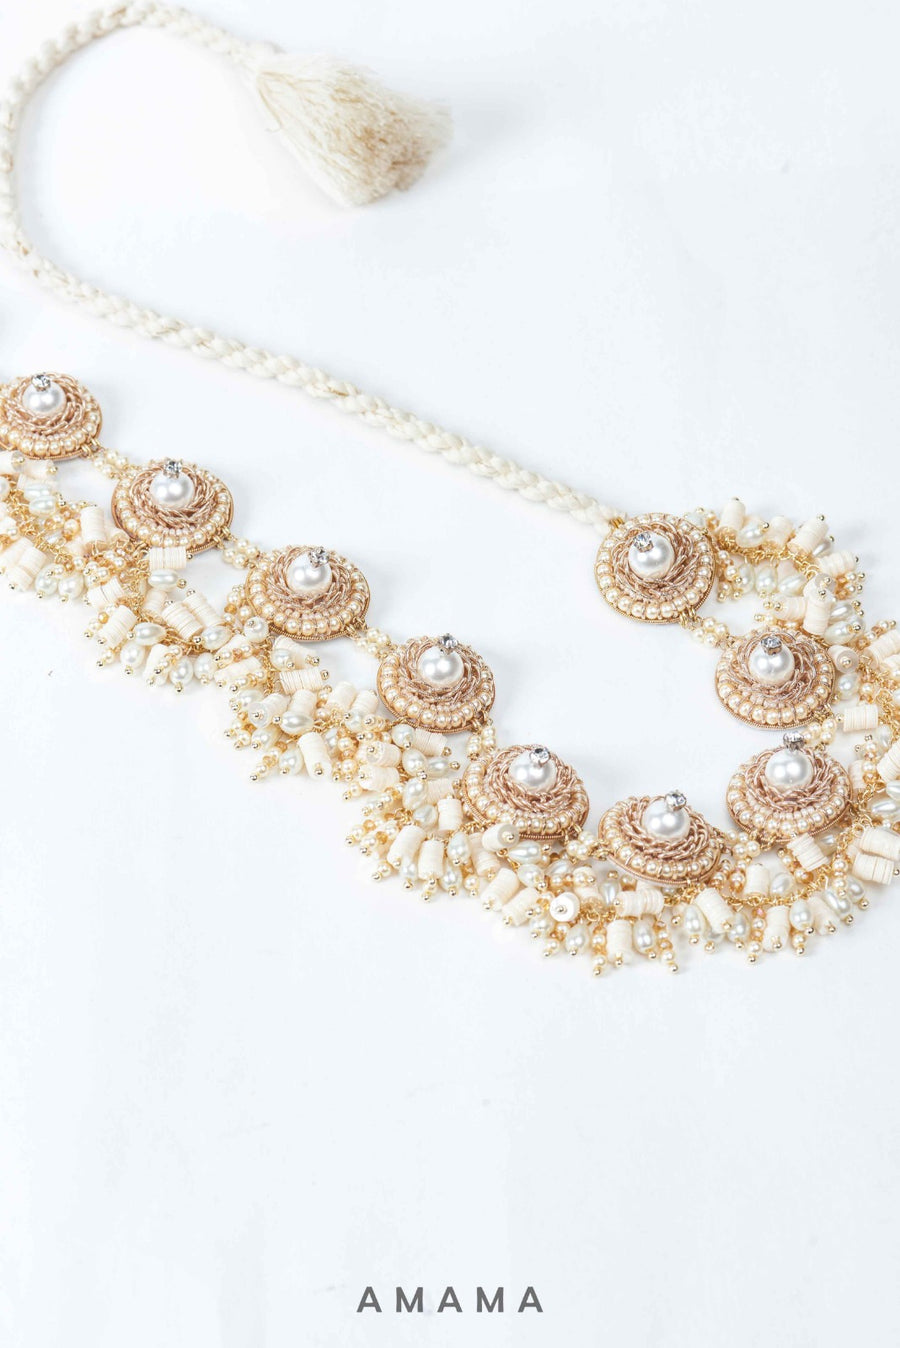 amama bridal jewellery